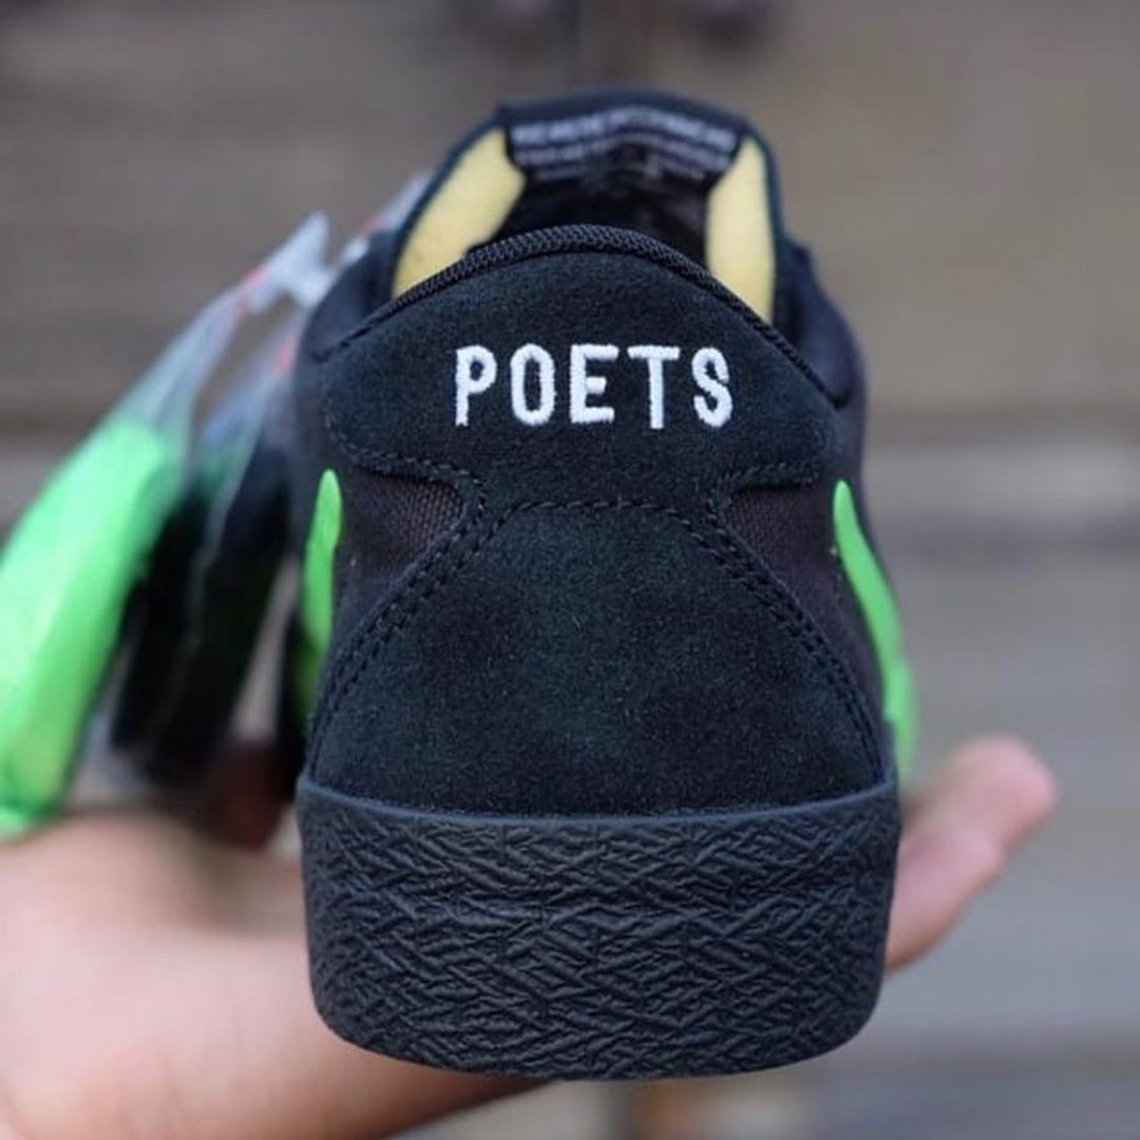 Poets Brand Nike Sb Bruin Release Info 01